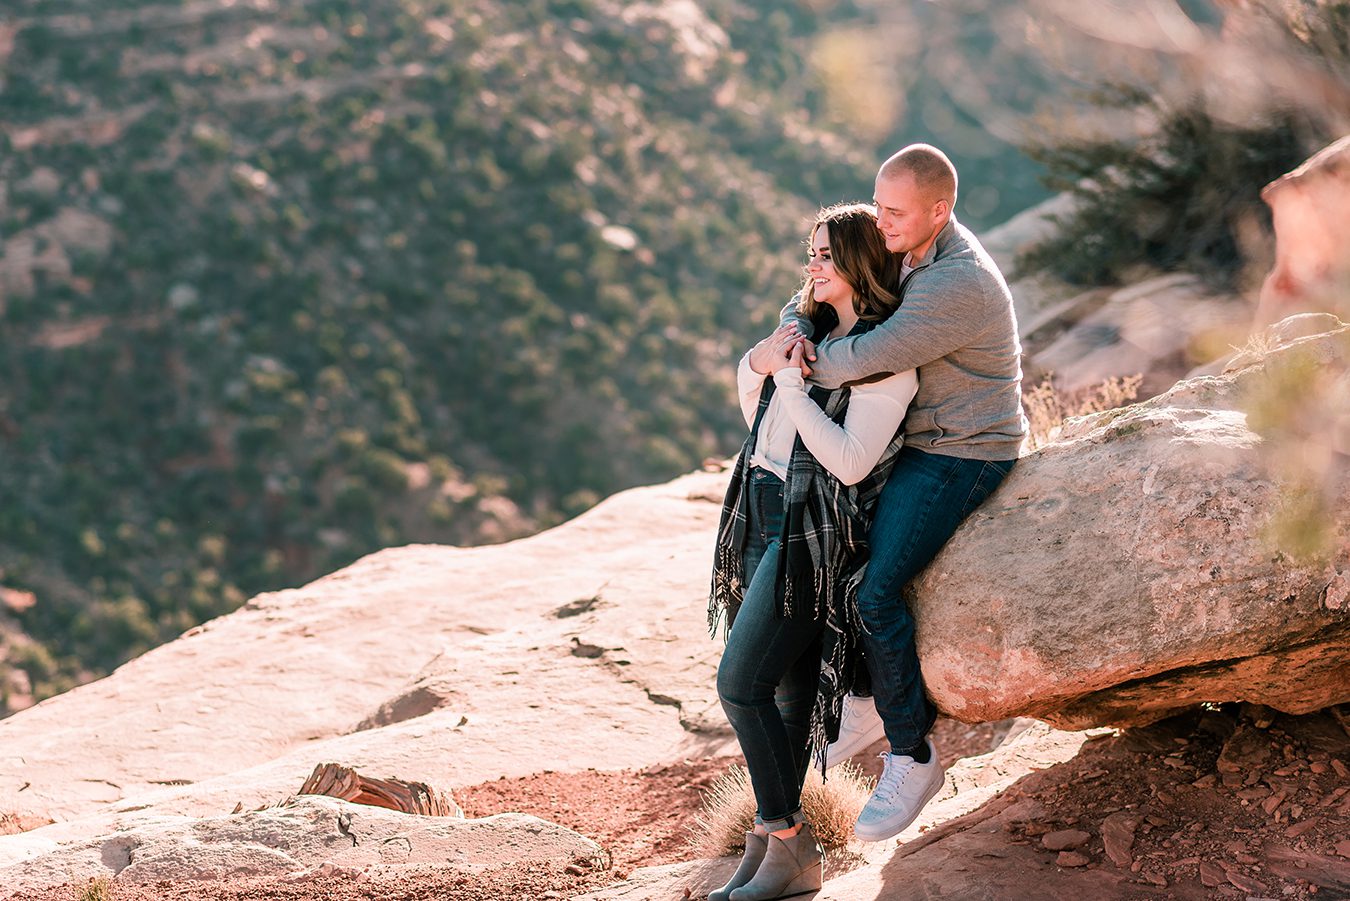 Trenton & Jamie's Engagement on the Colorado National Monument | amanda.matilda.photography